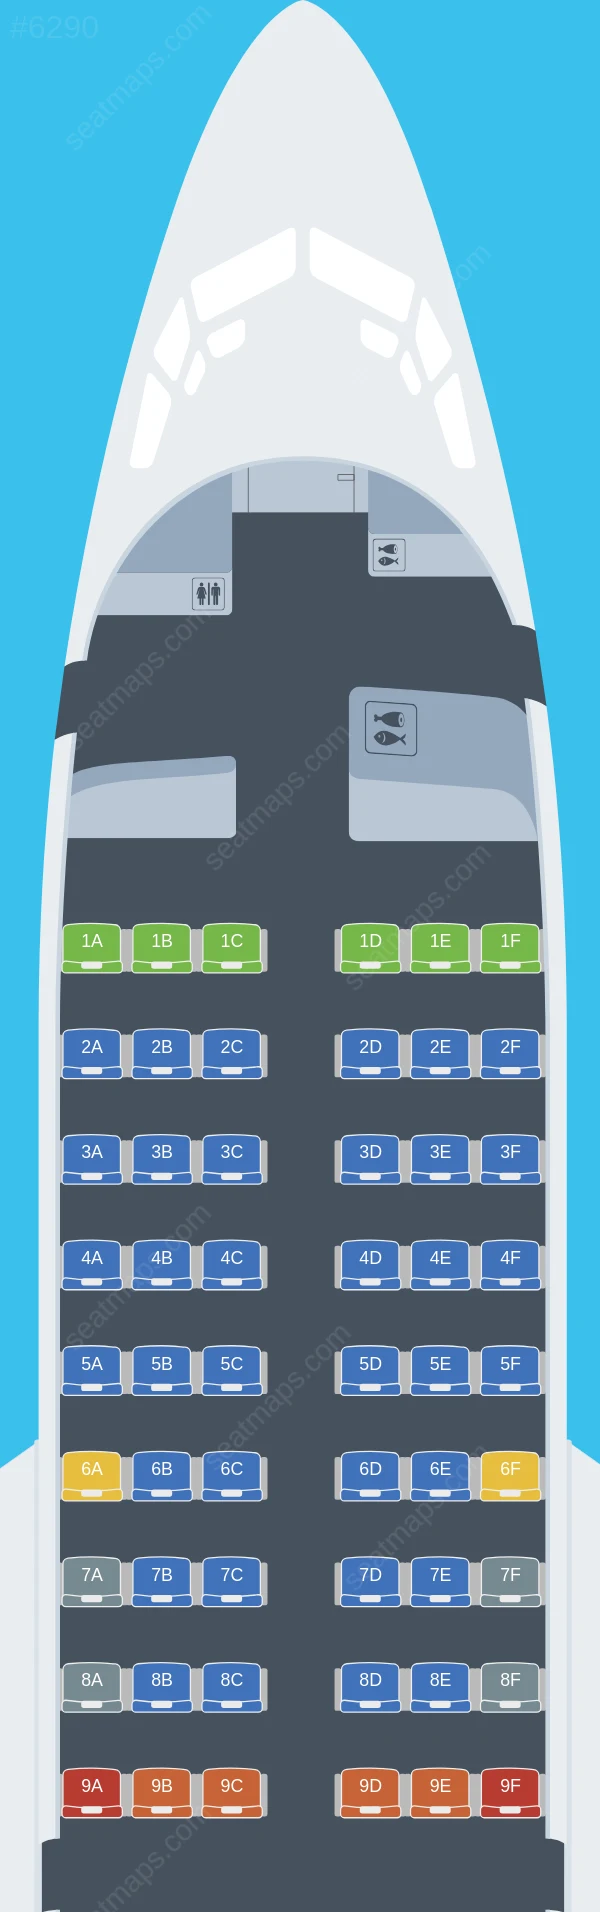 UTair Boeing 737-500 seatmap preview